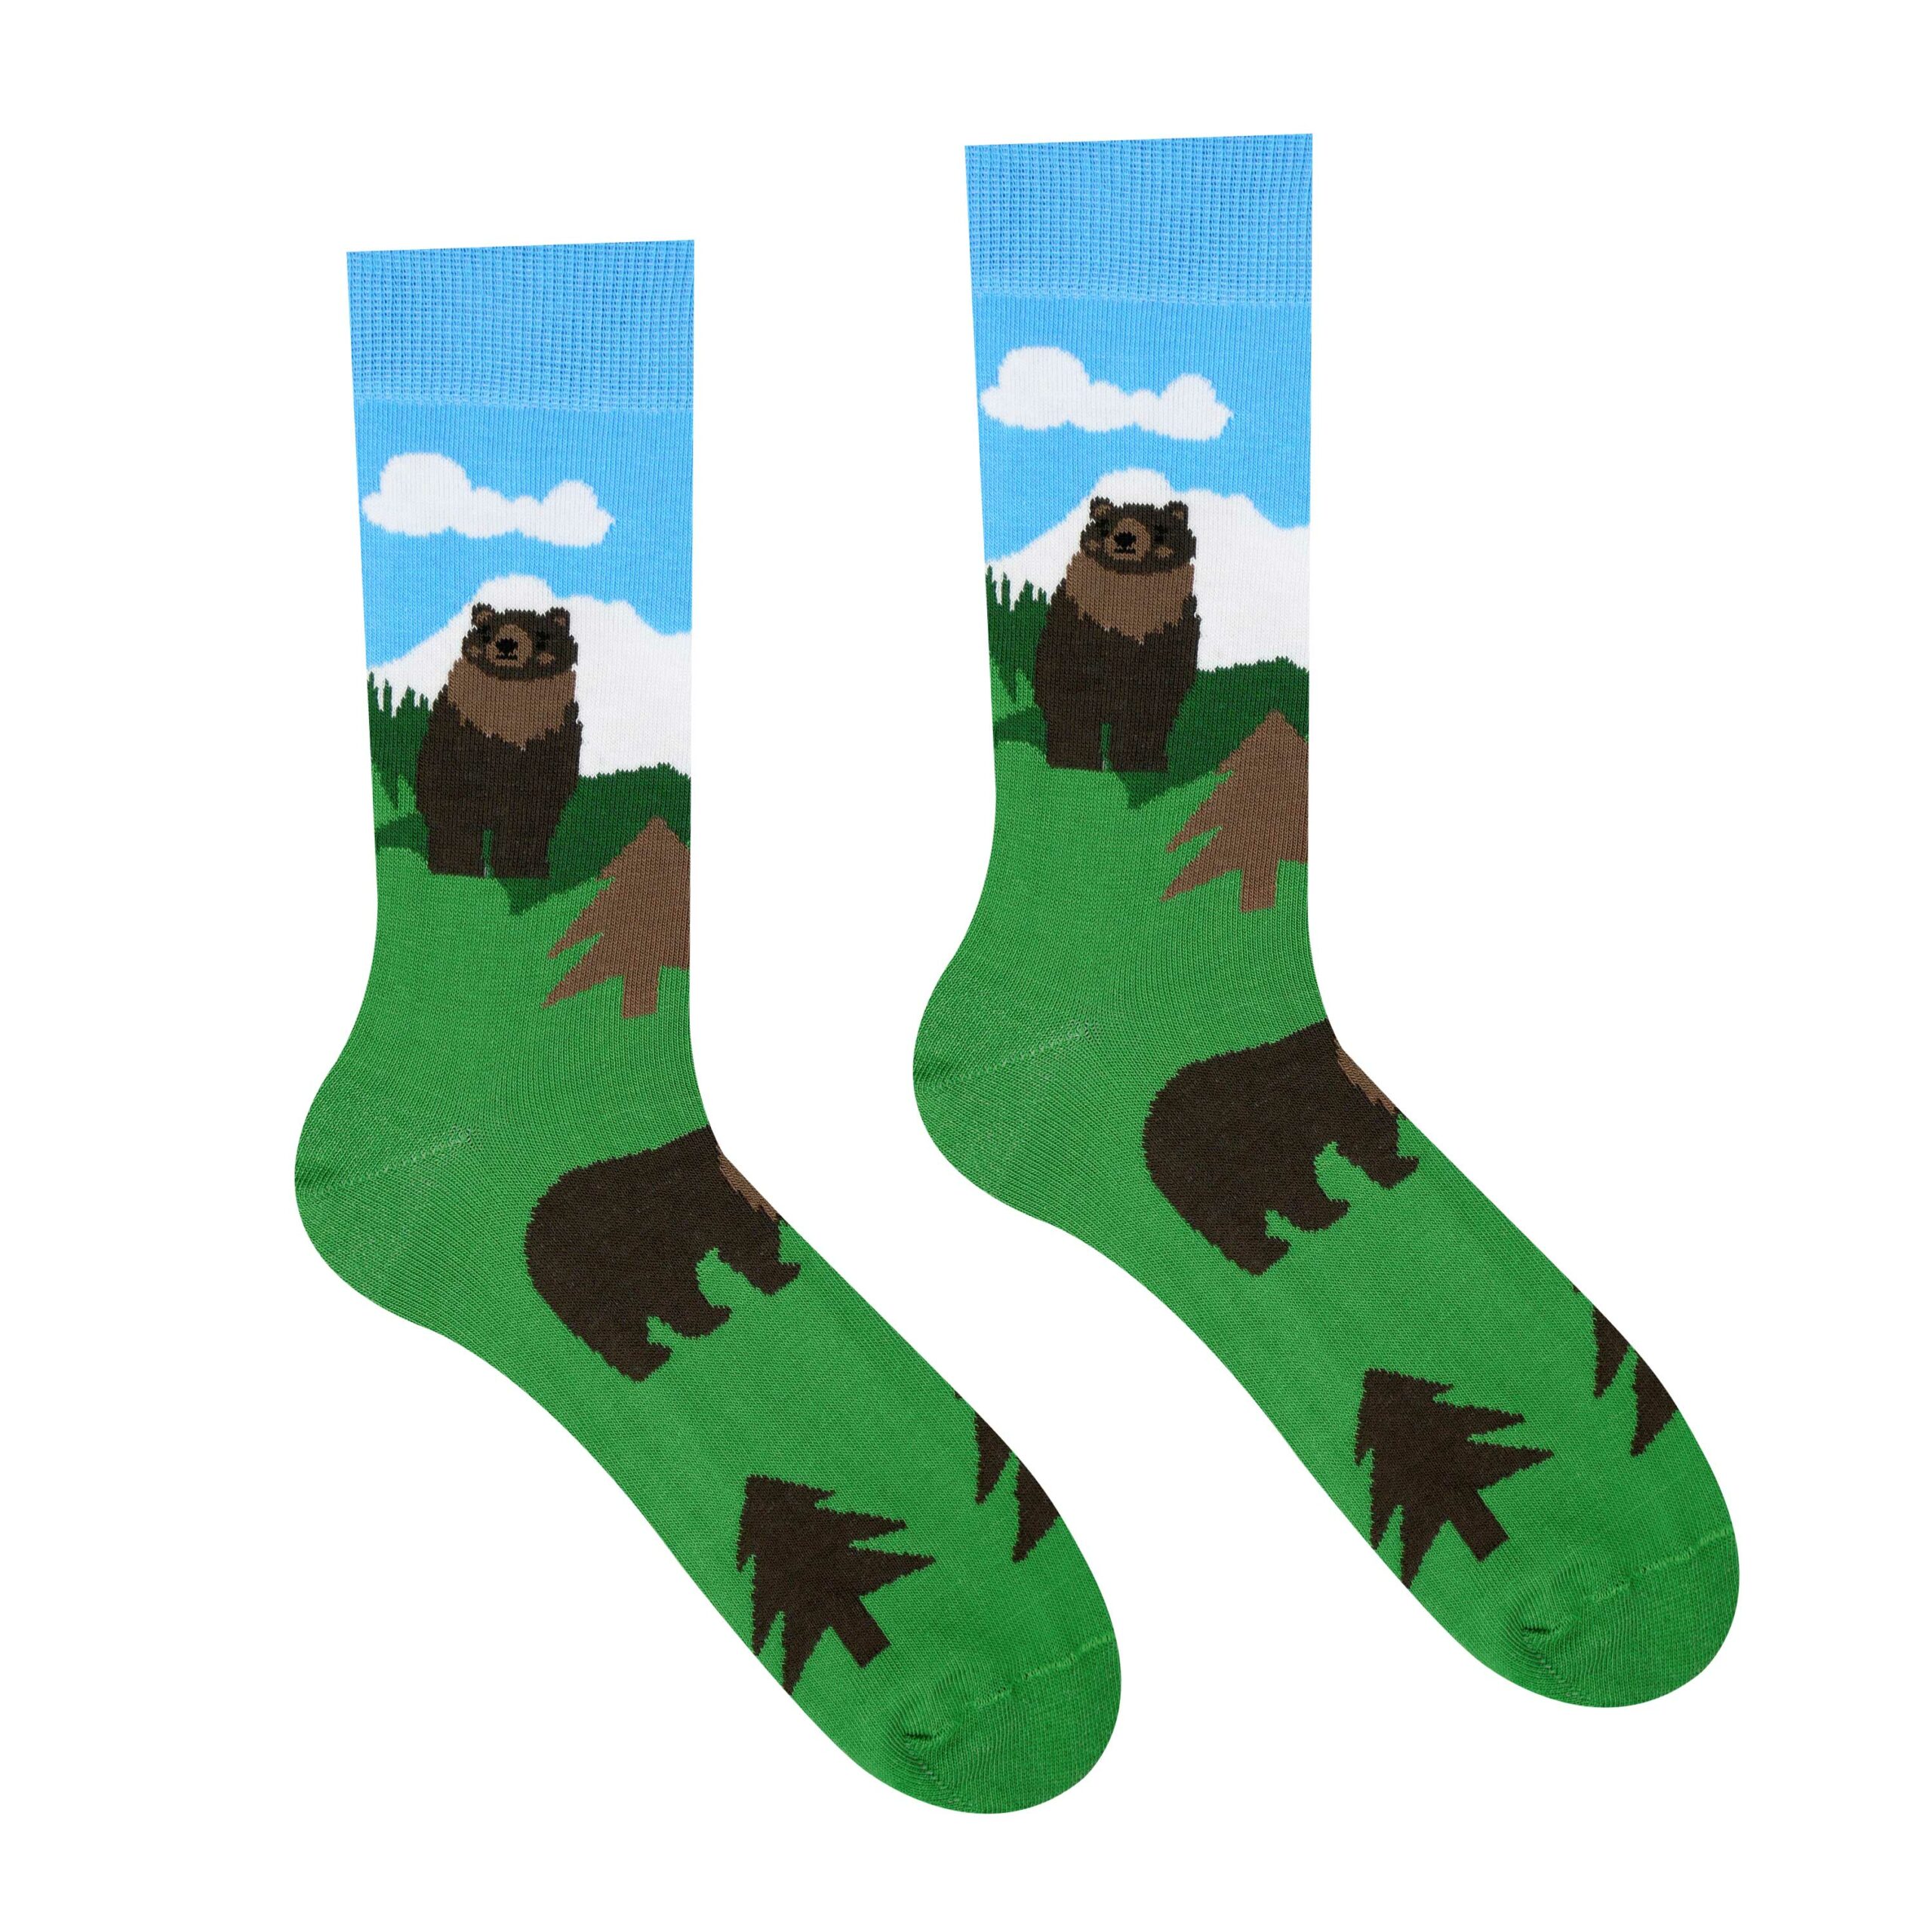 Veselé ponožky Vysoké Tatry – Medveď